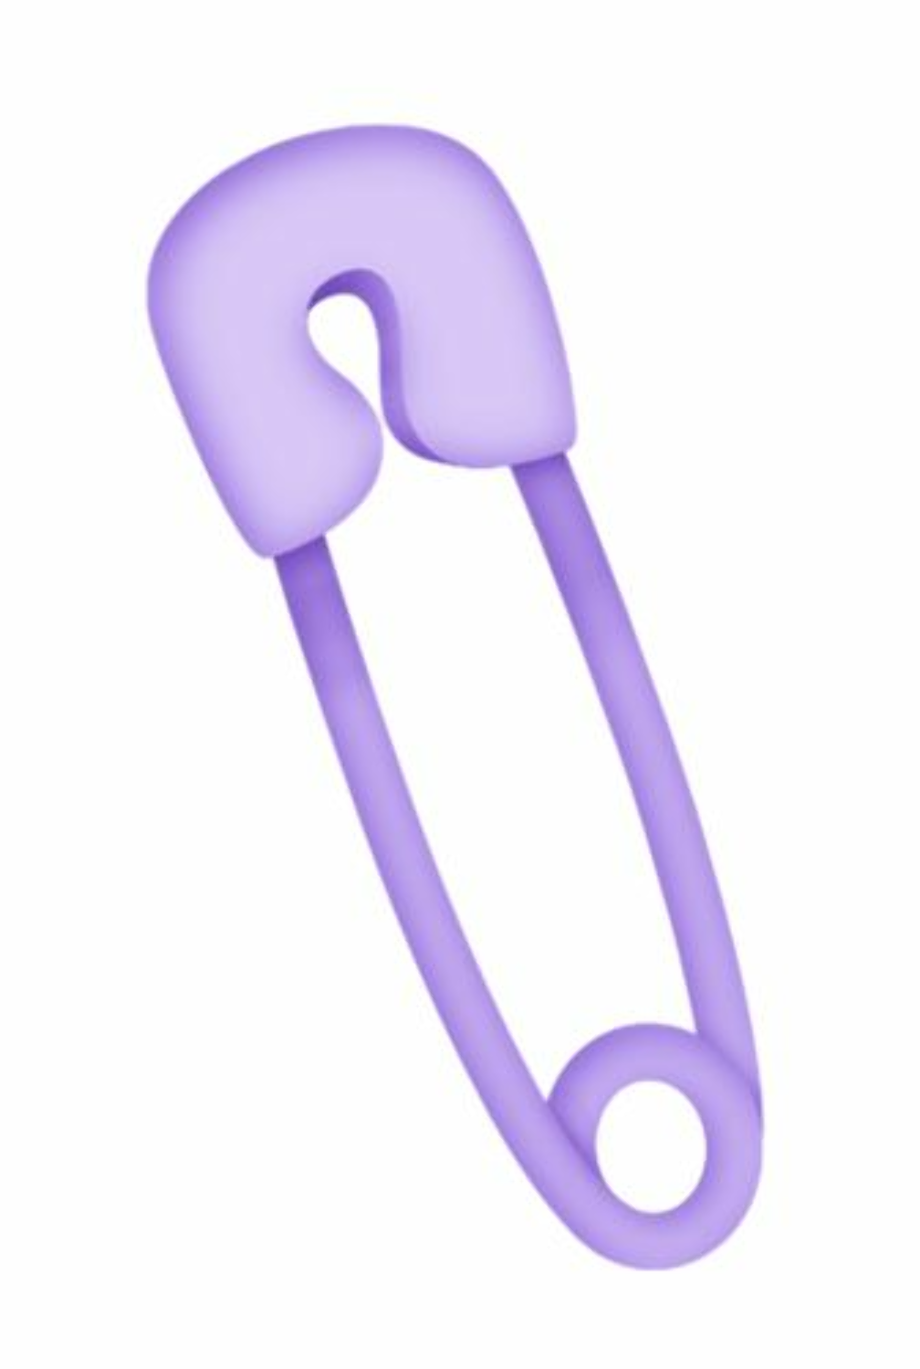 diaper clipart purple